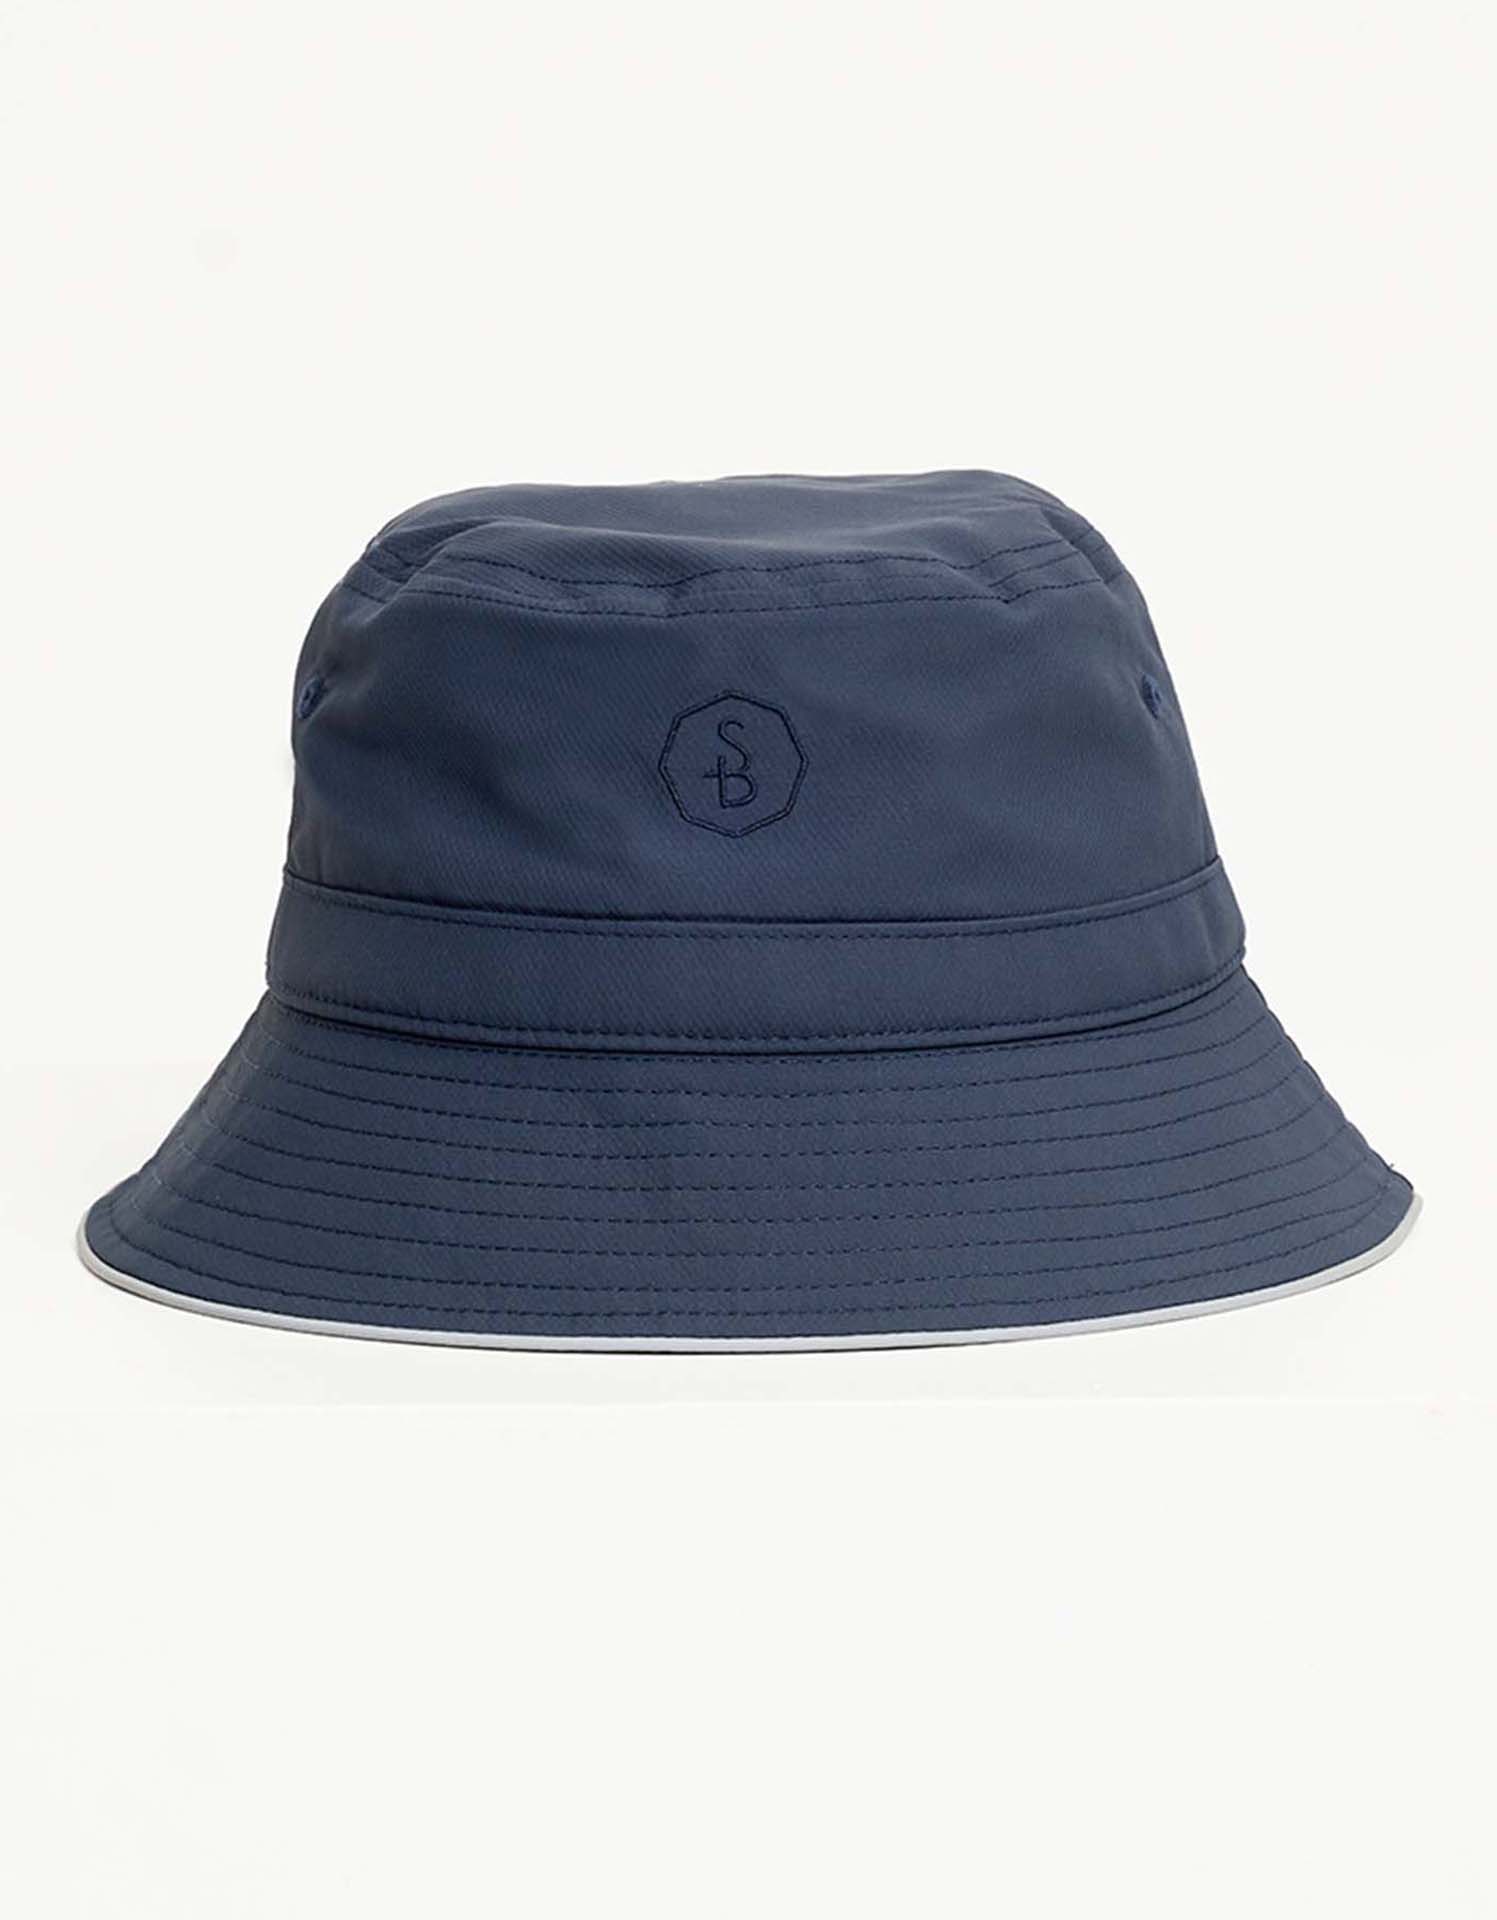 Urban Bucket Hat UPF50+, Men's Sun Hat